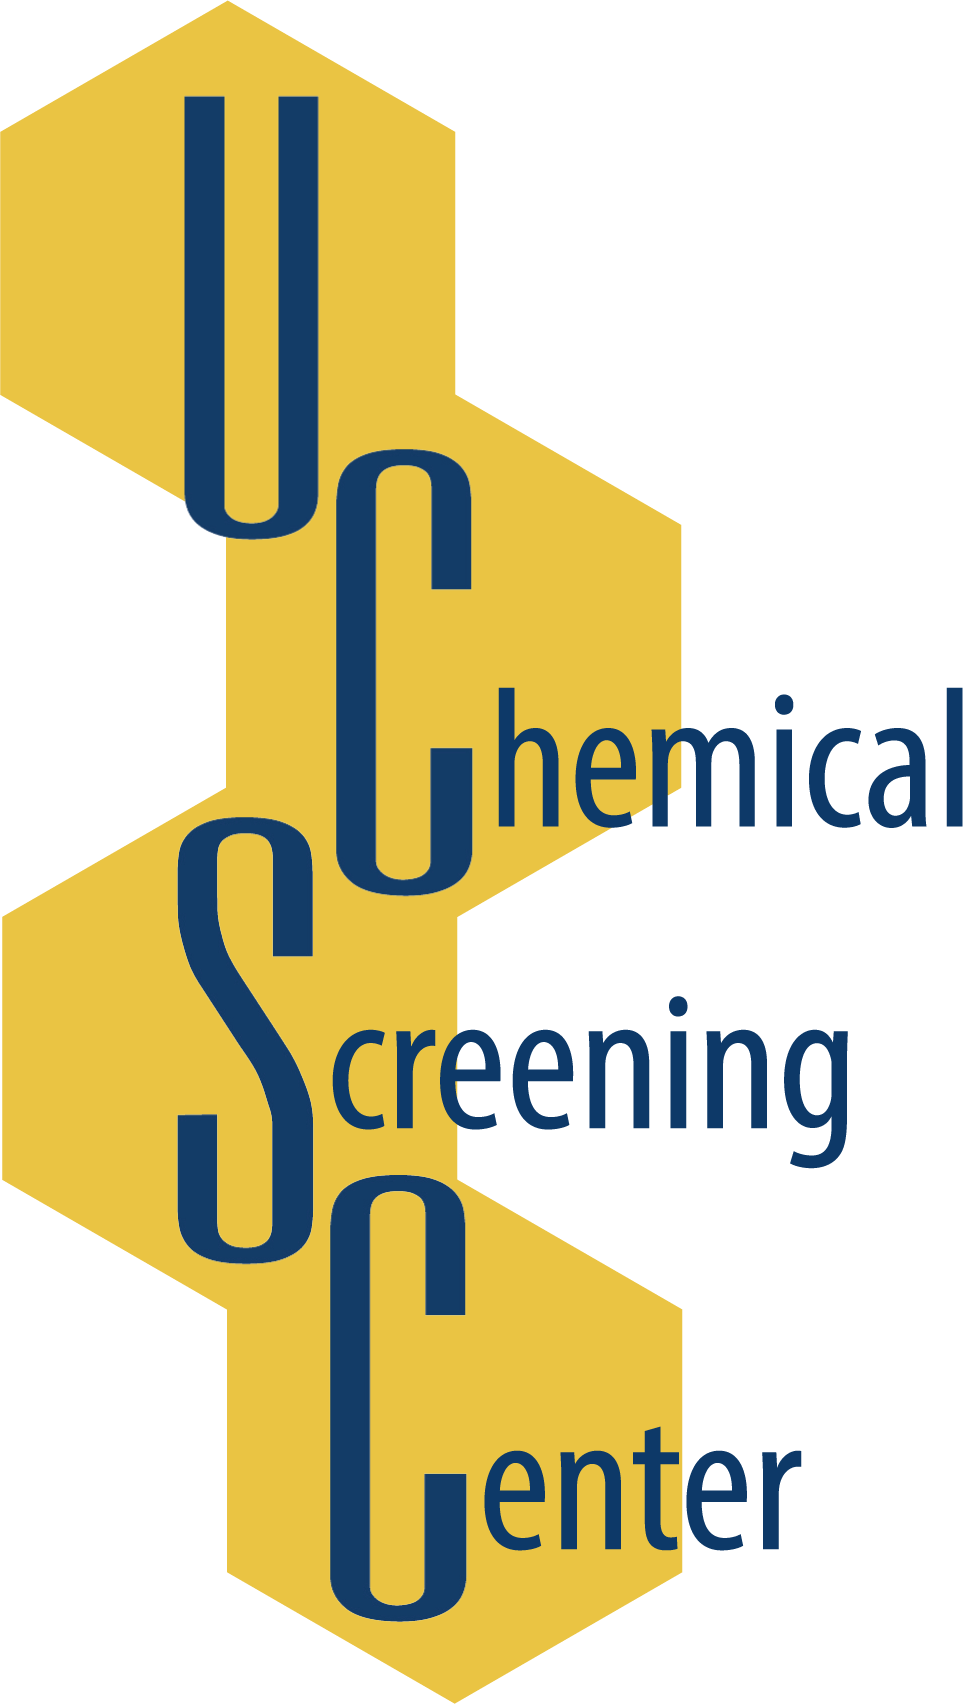 UCSC chemical screening center logo